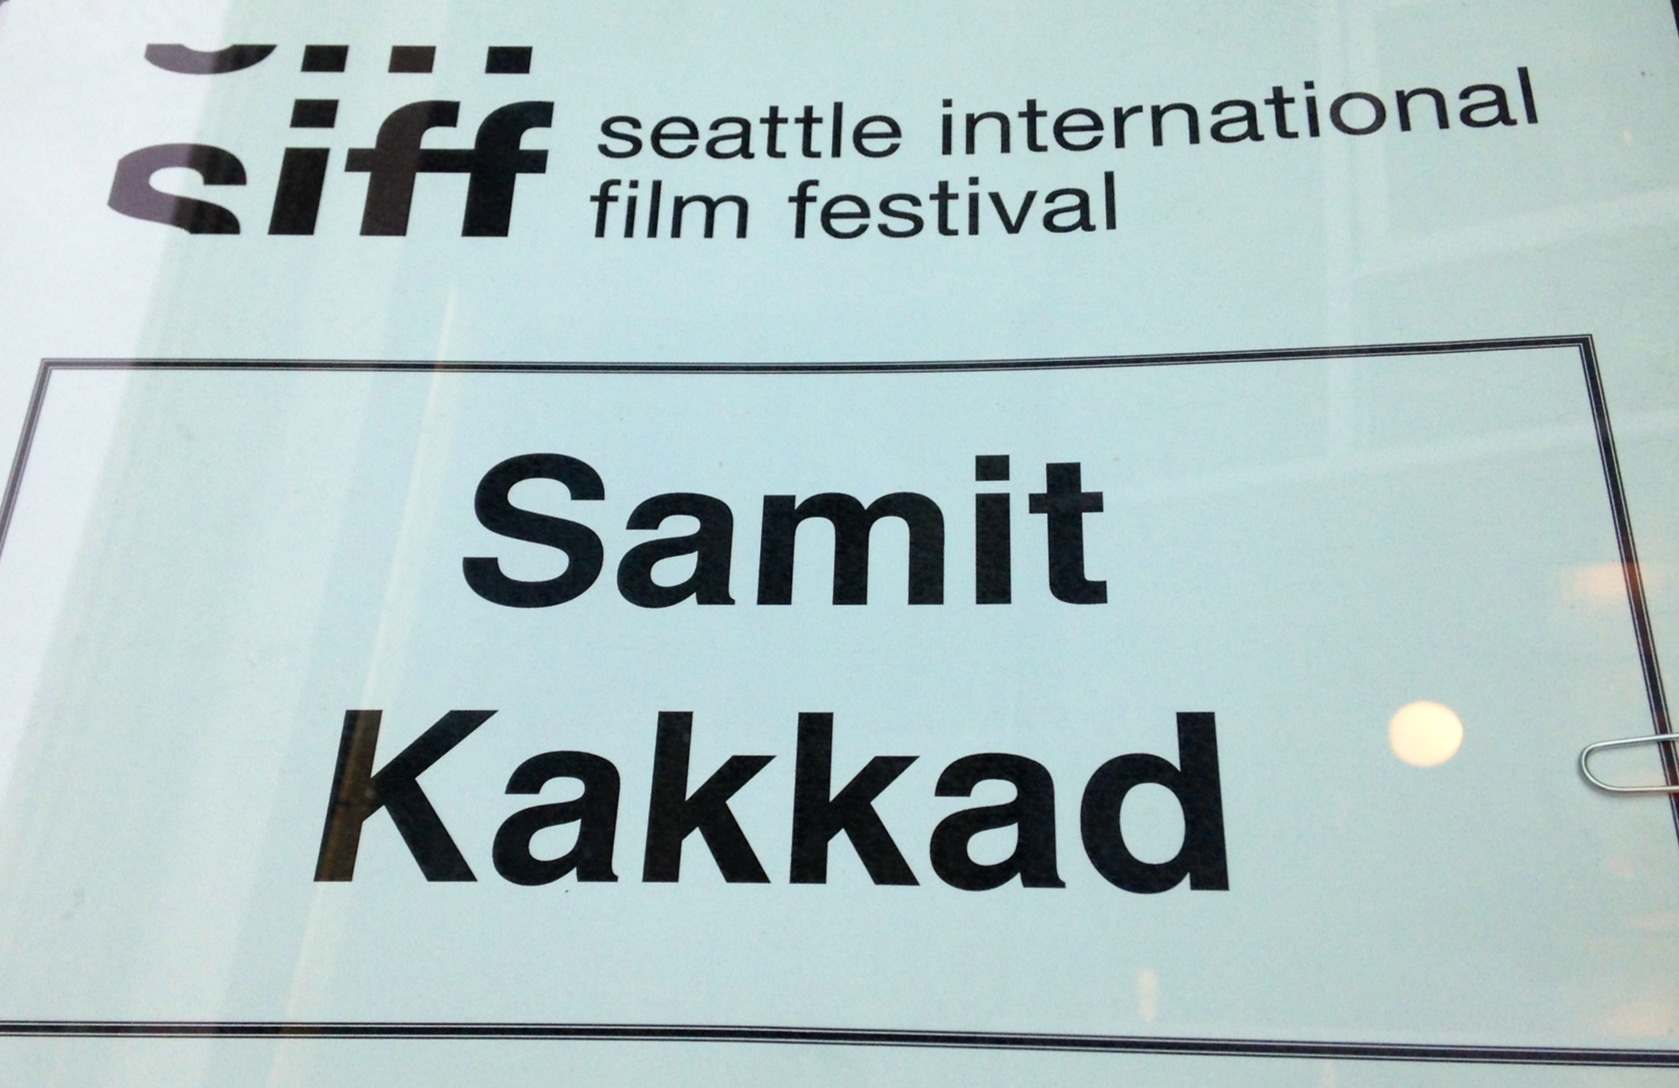 39th Seattle International Film Festival 2013